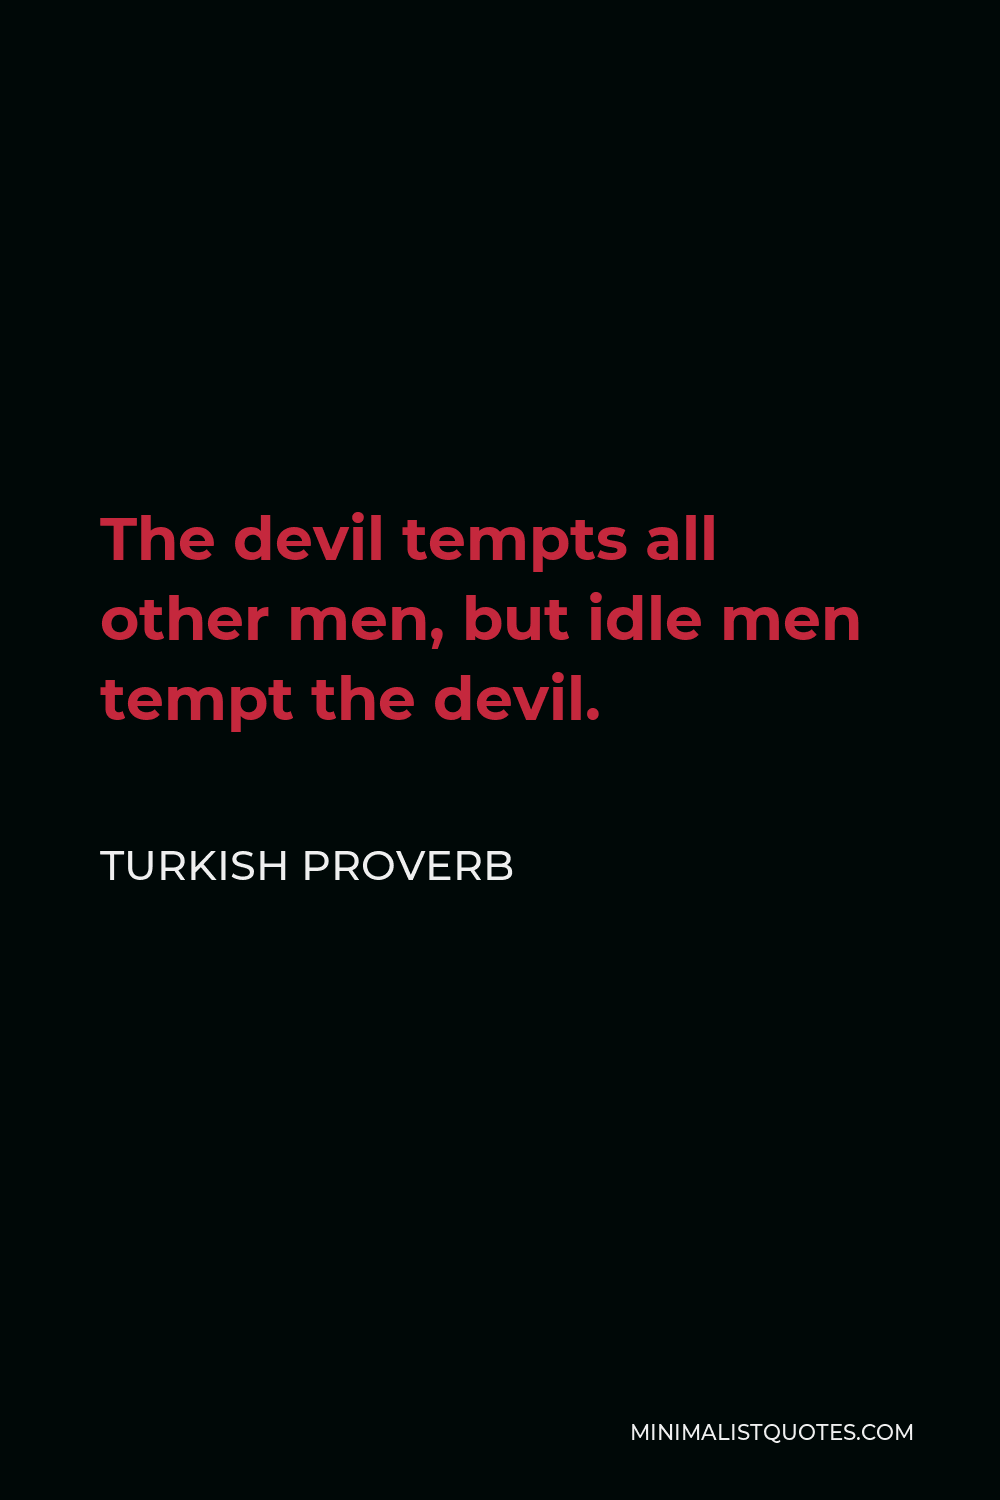 Turkish Proverb Quote - The devil tempts all other men, but idle men tempt the devil.